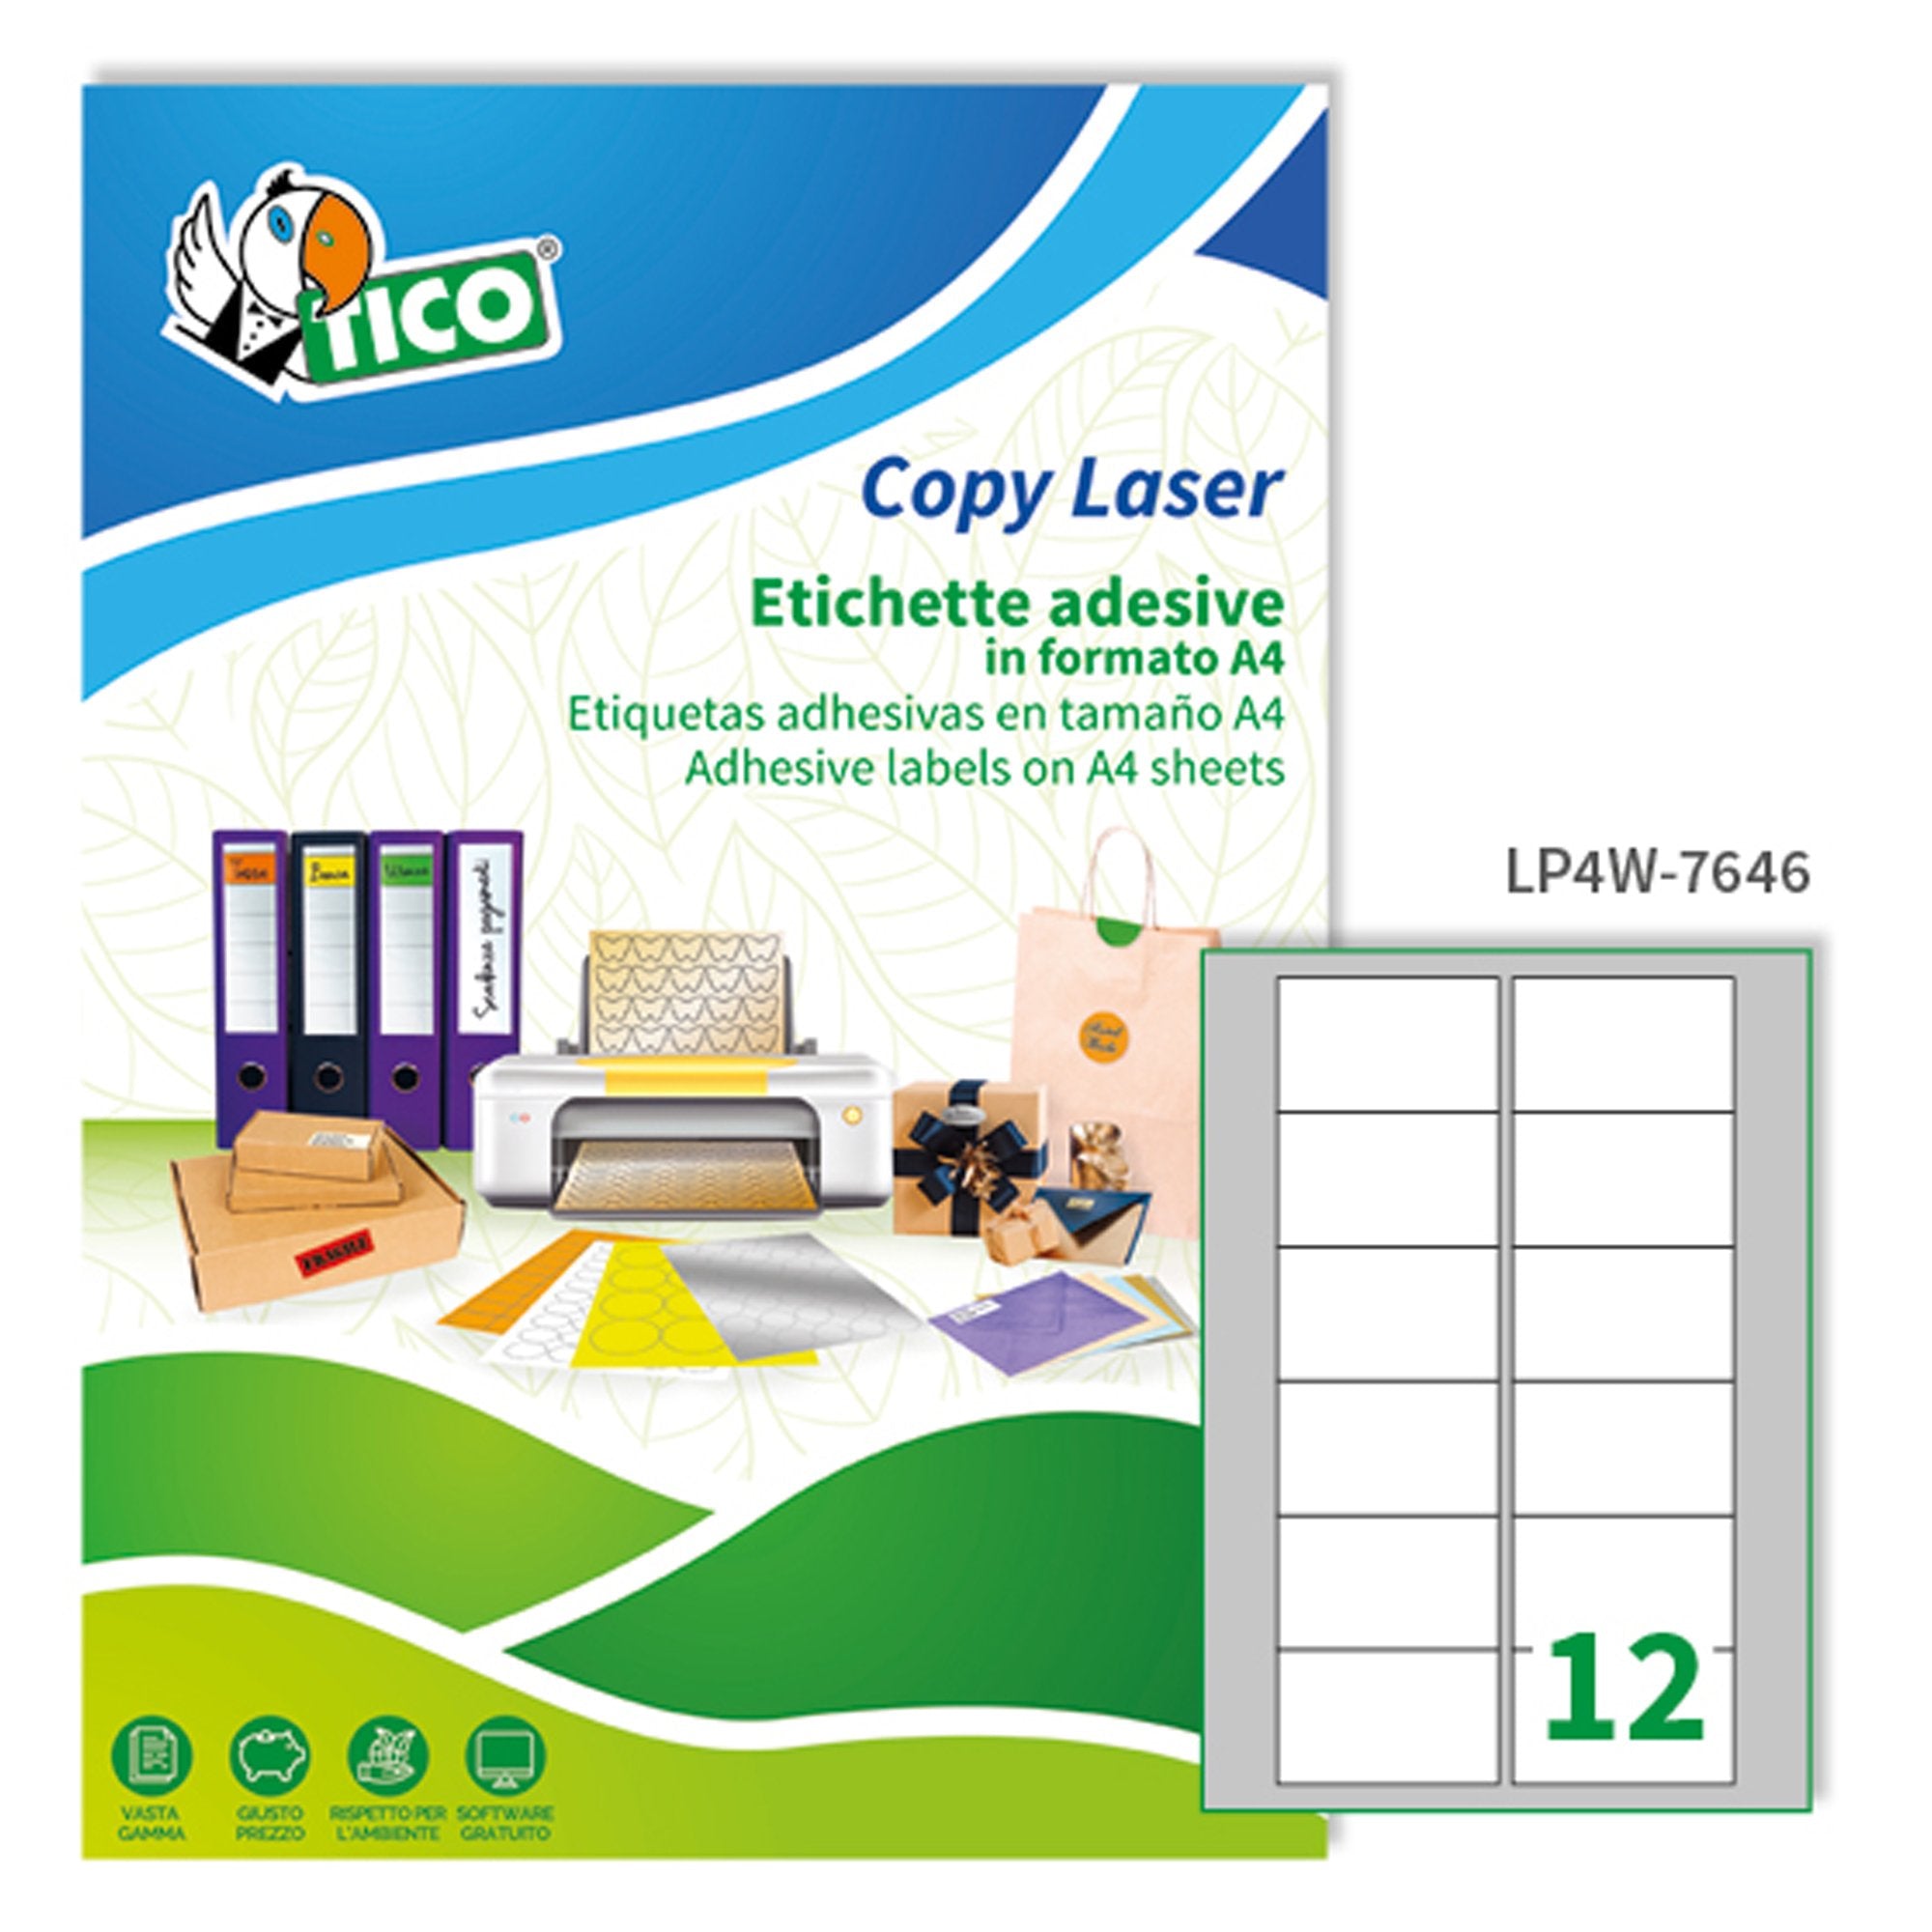 tico-etichetta-adesiva-lp4w-bianca-100fg-a4-76-2x46-4mm-12et-fg-laser